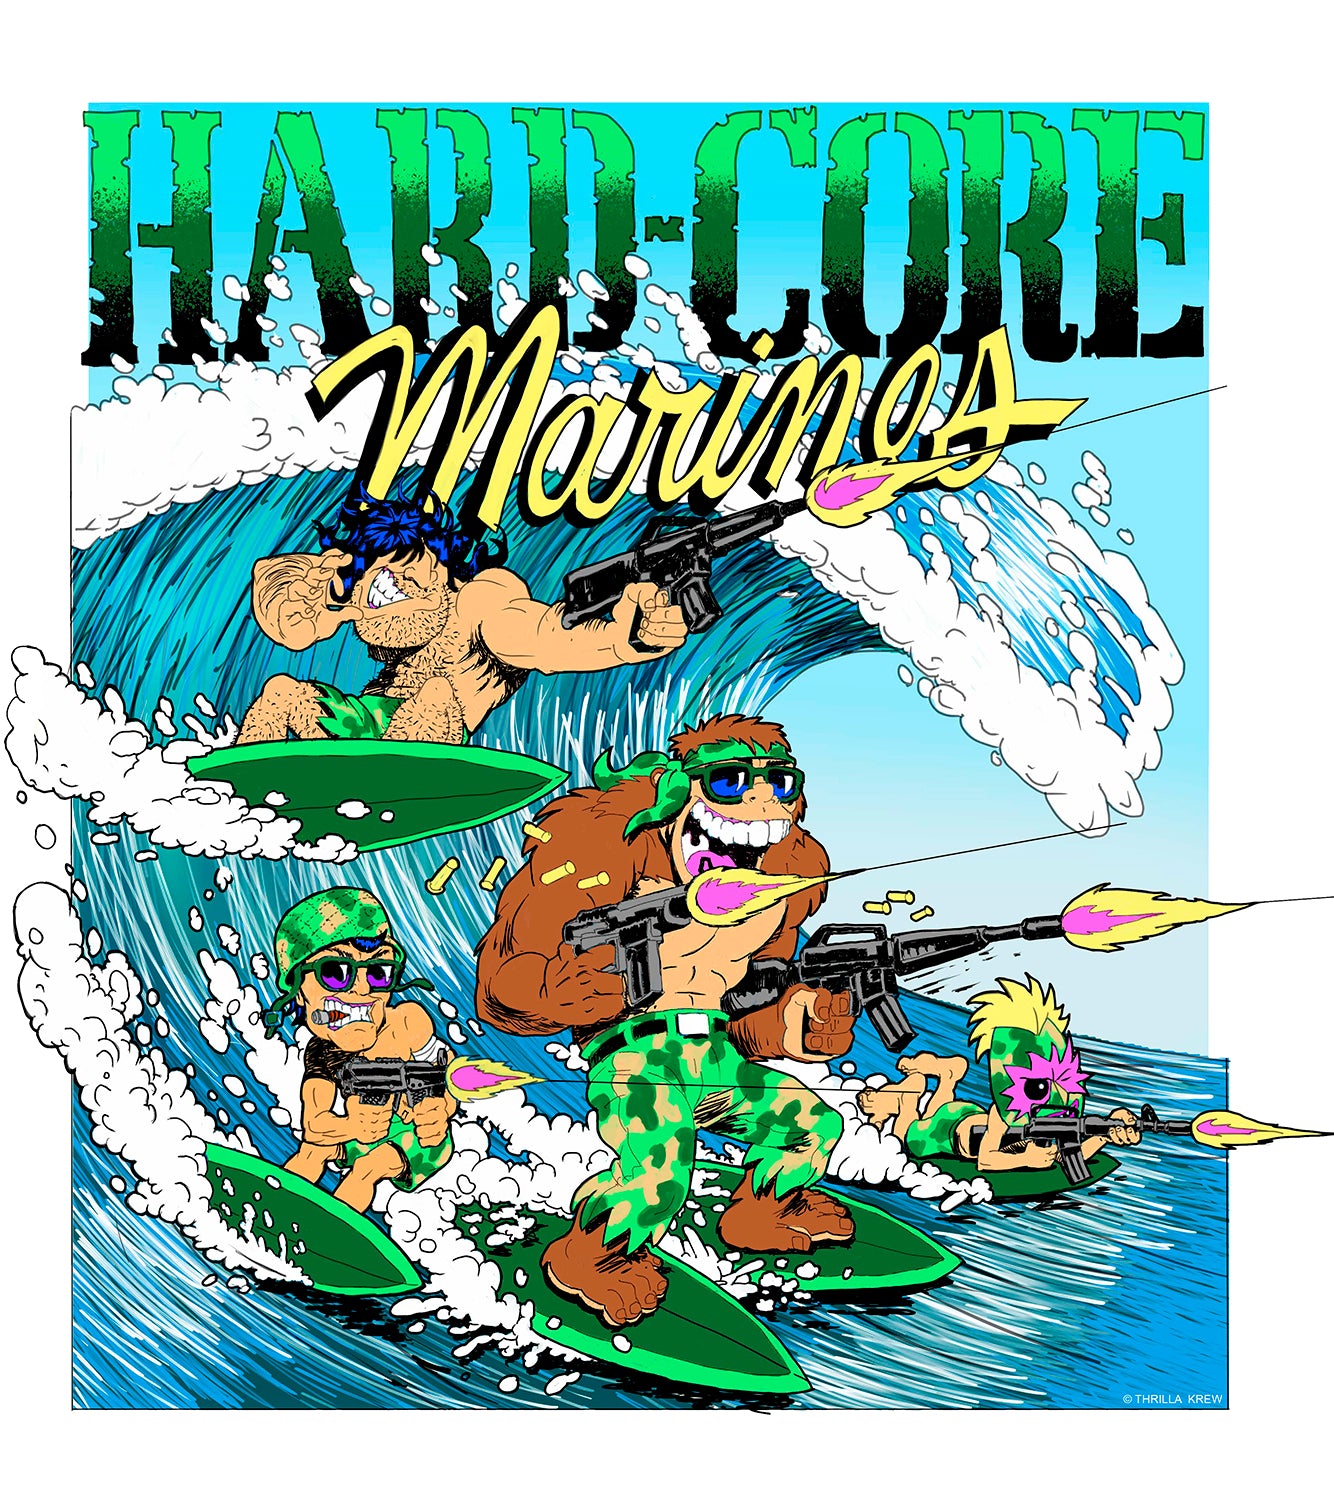 Hard-Core Marines (Black)